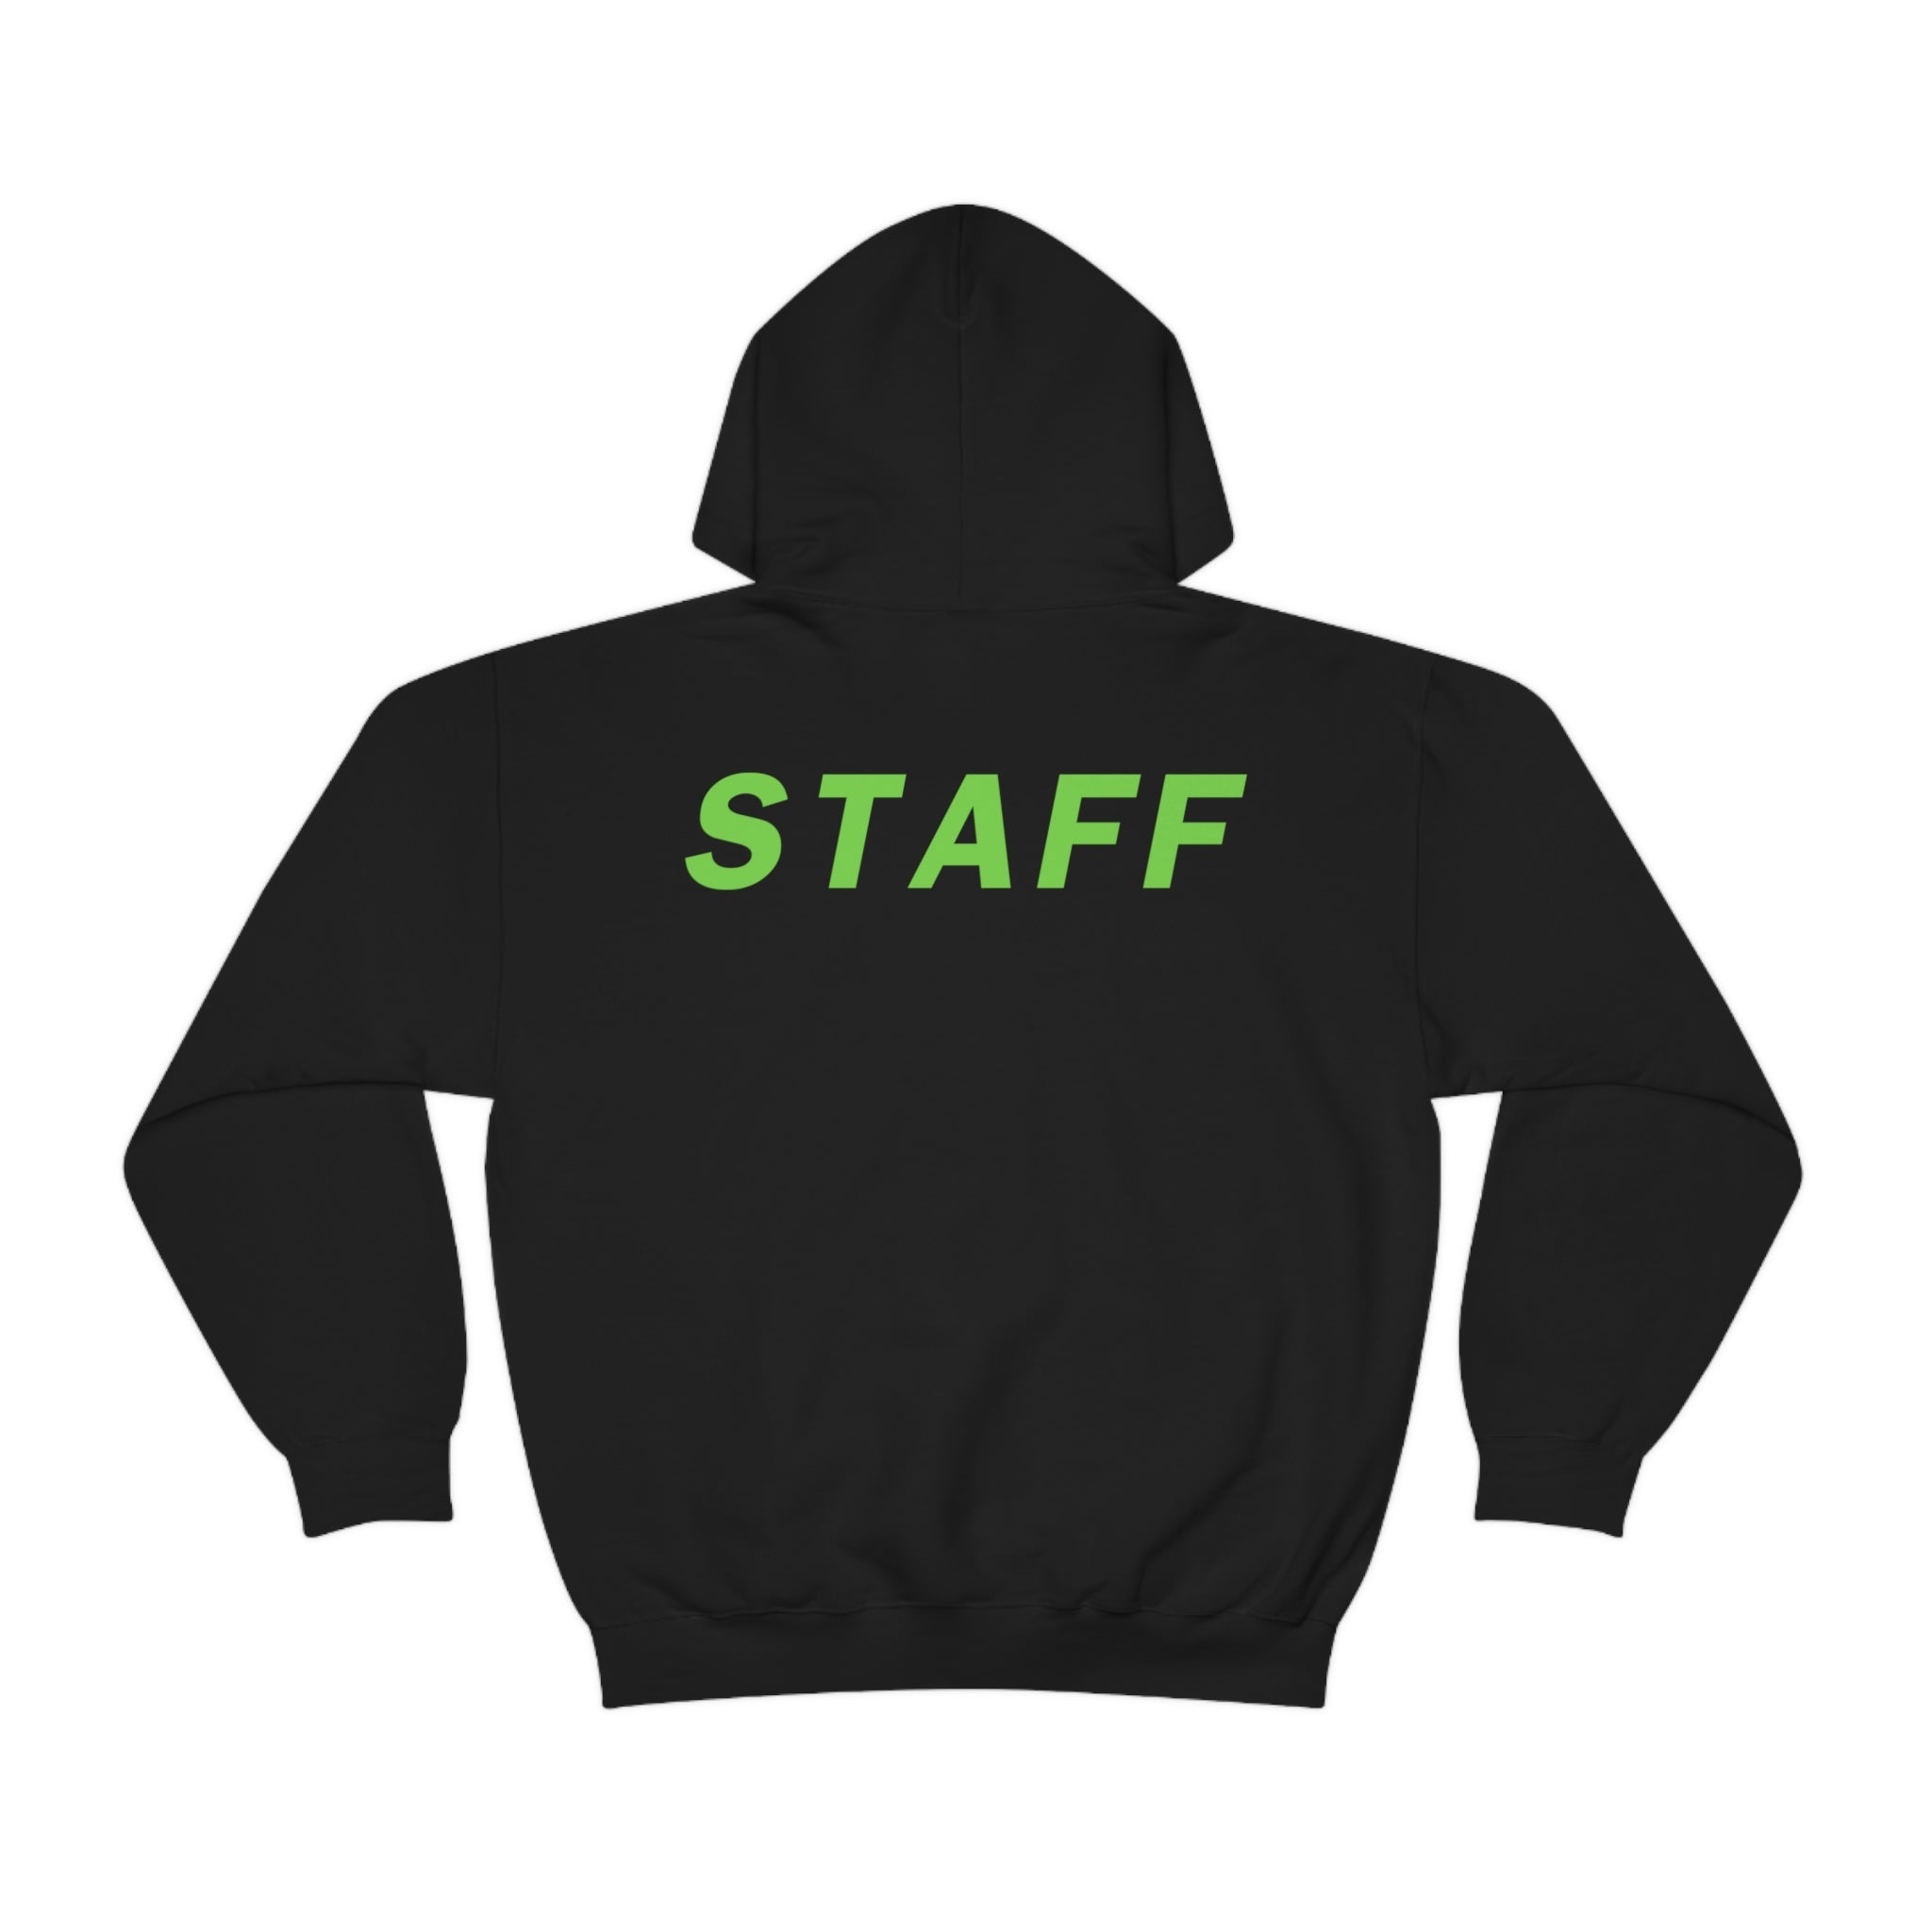 All Staff "STAFF" Black Hoodie